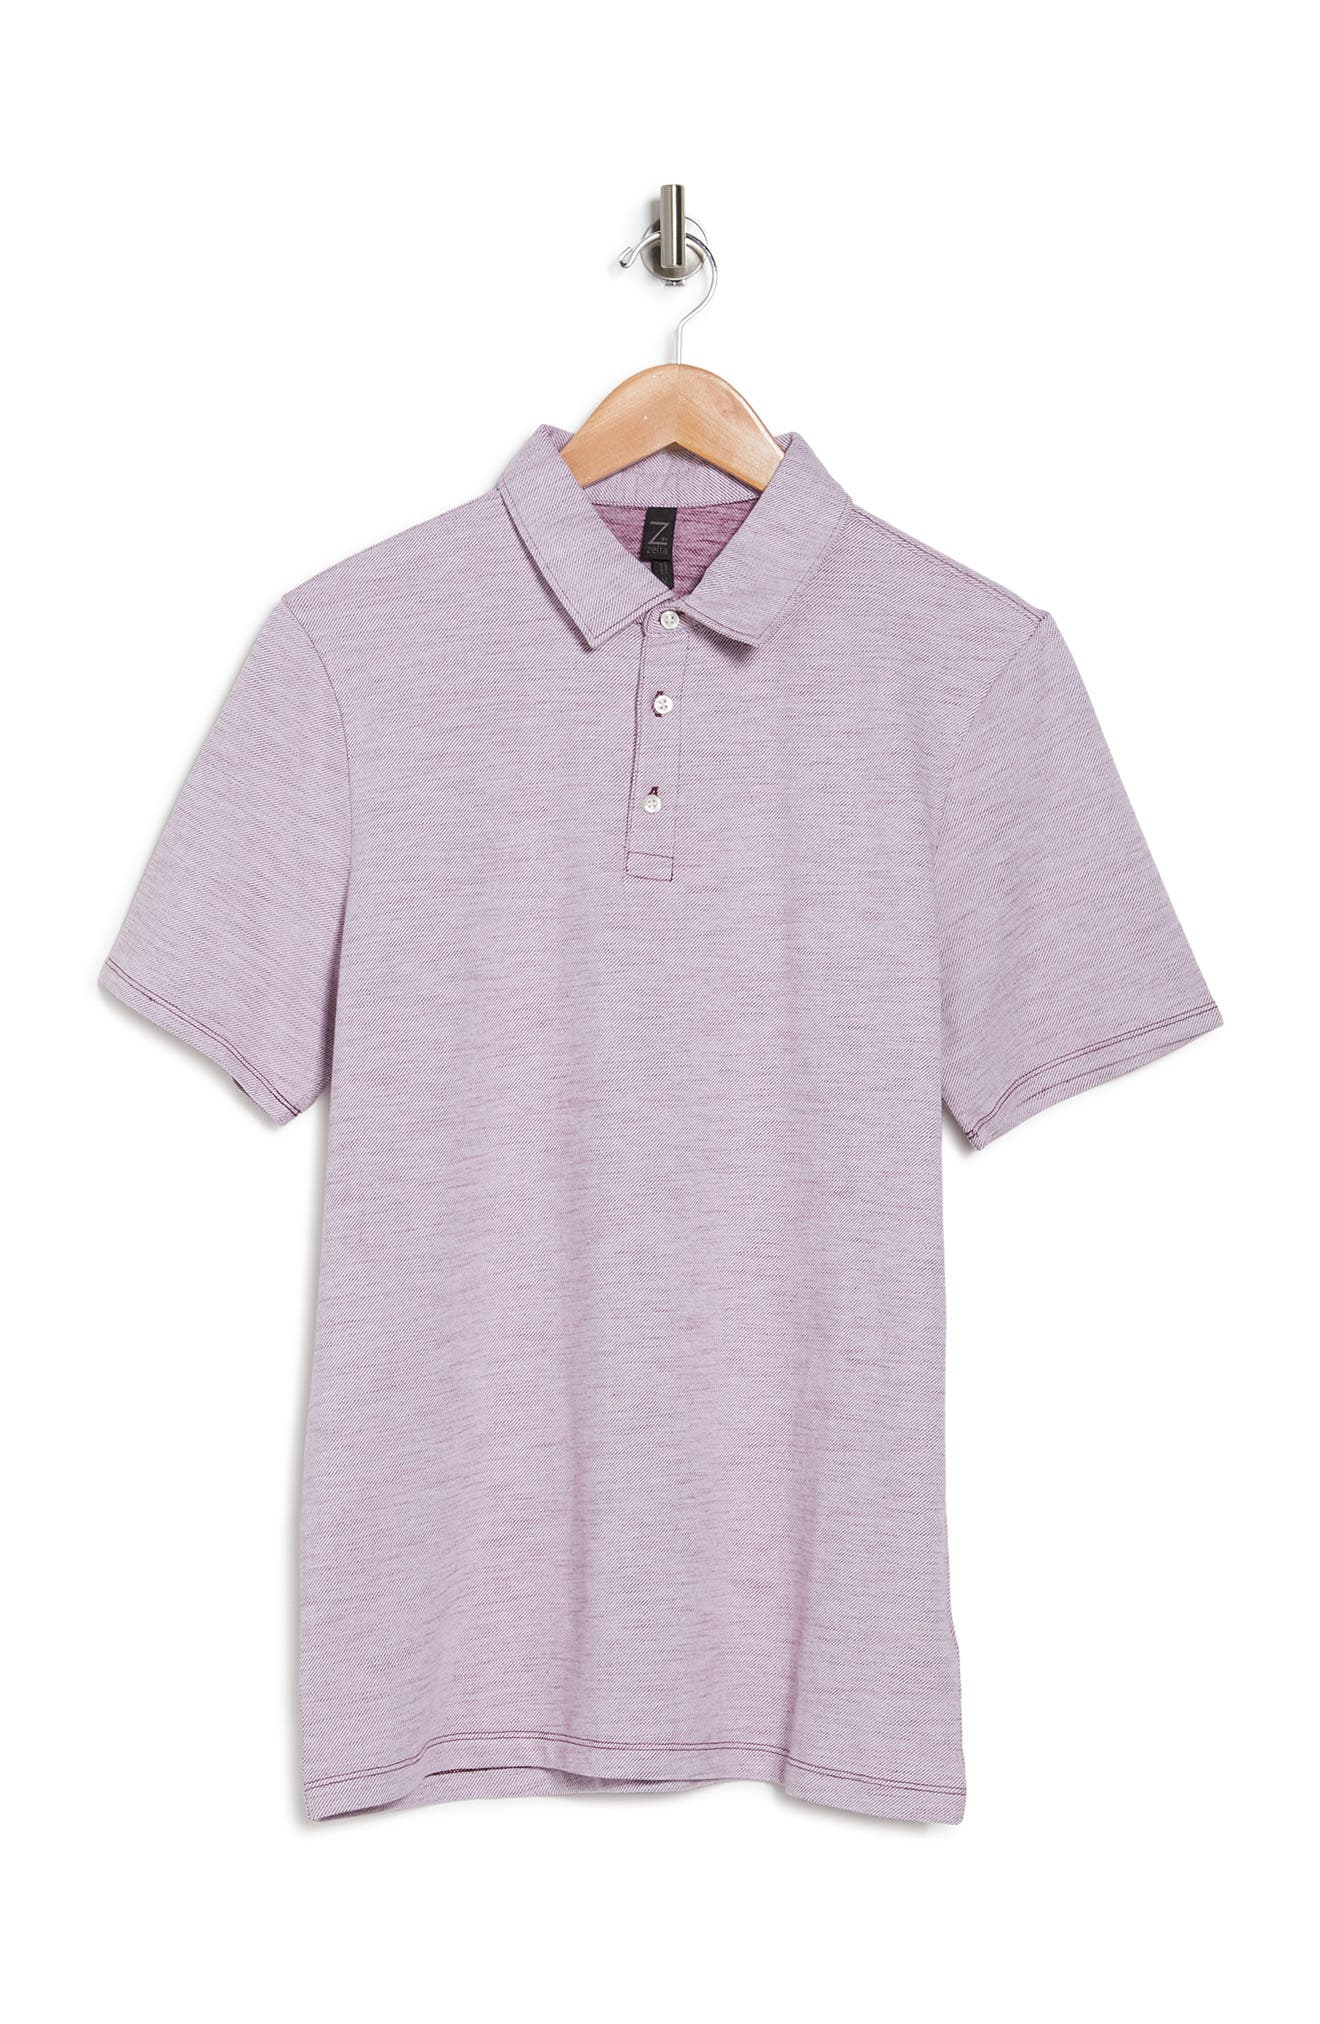 Z By Zella In Game Knit Golf Polo In Purple Claret